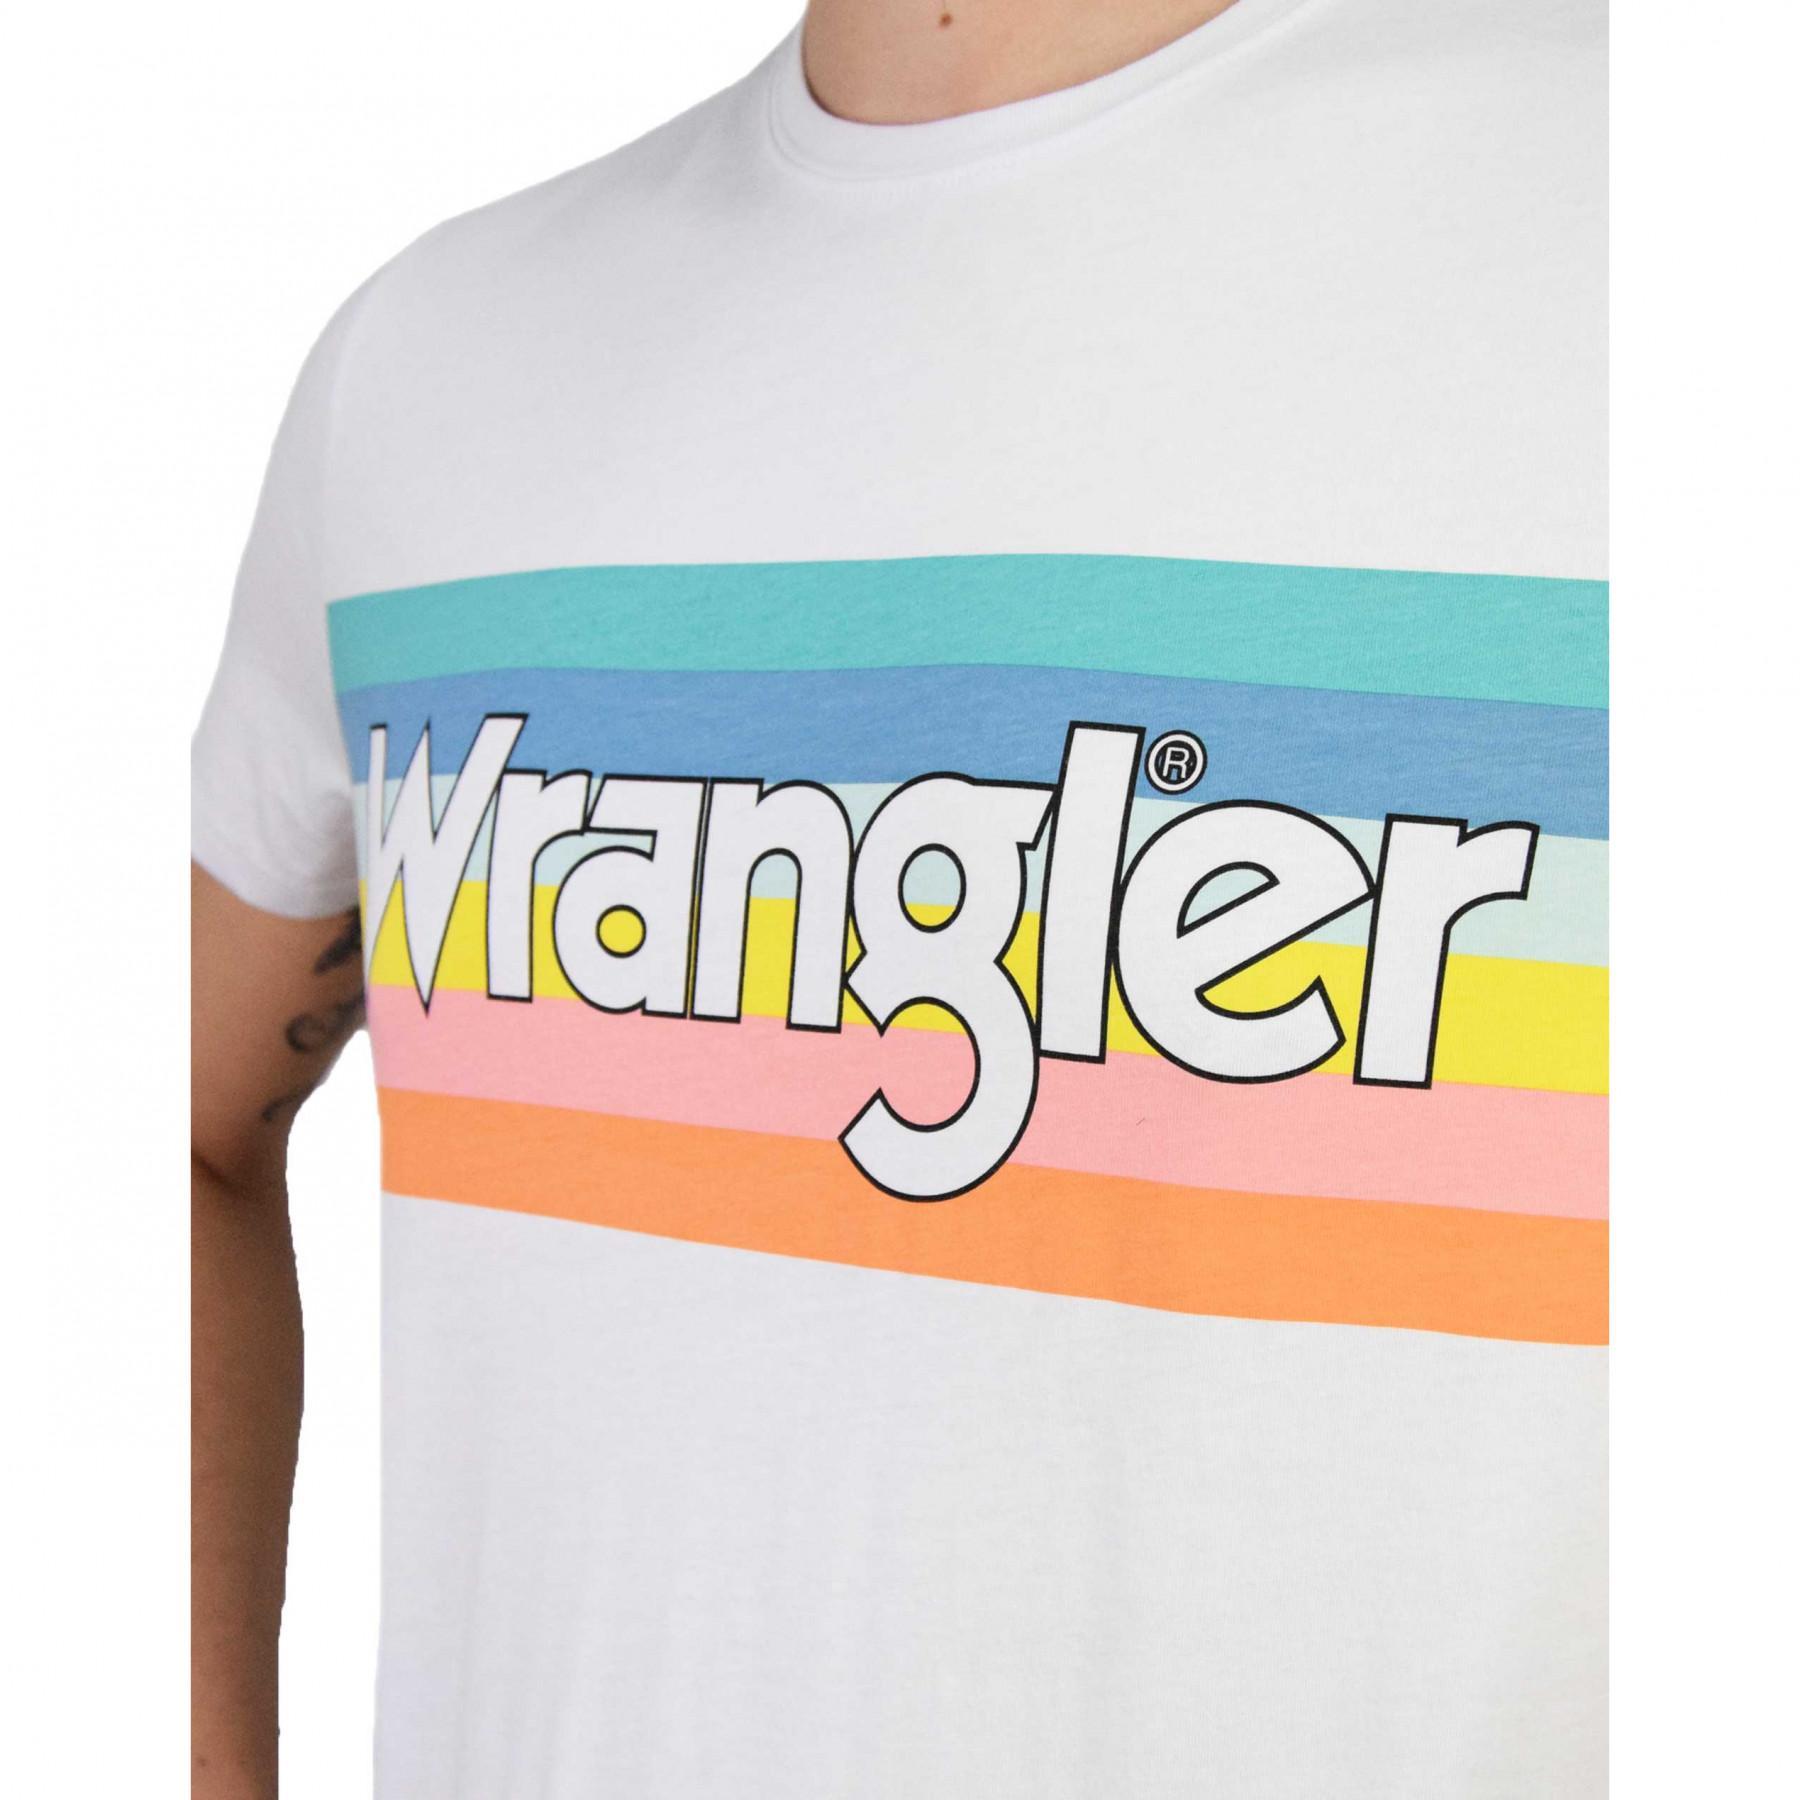 Koszulka Wrangler summer logo tee